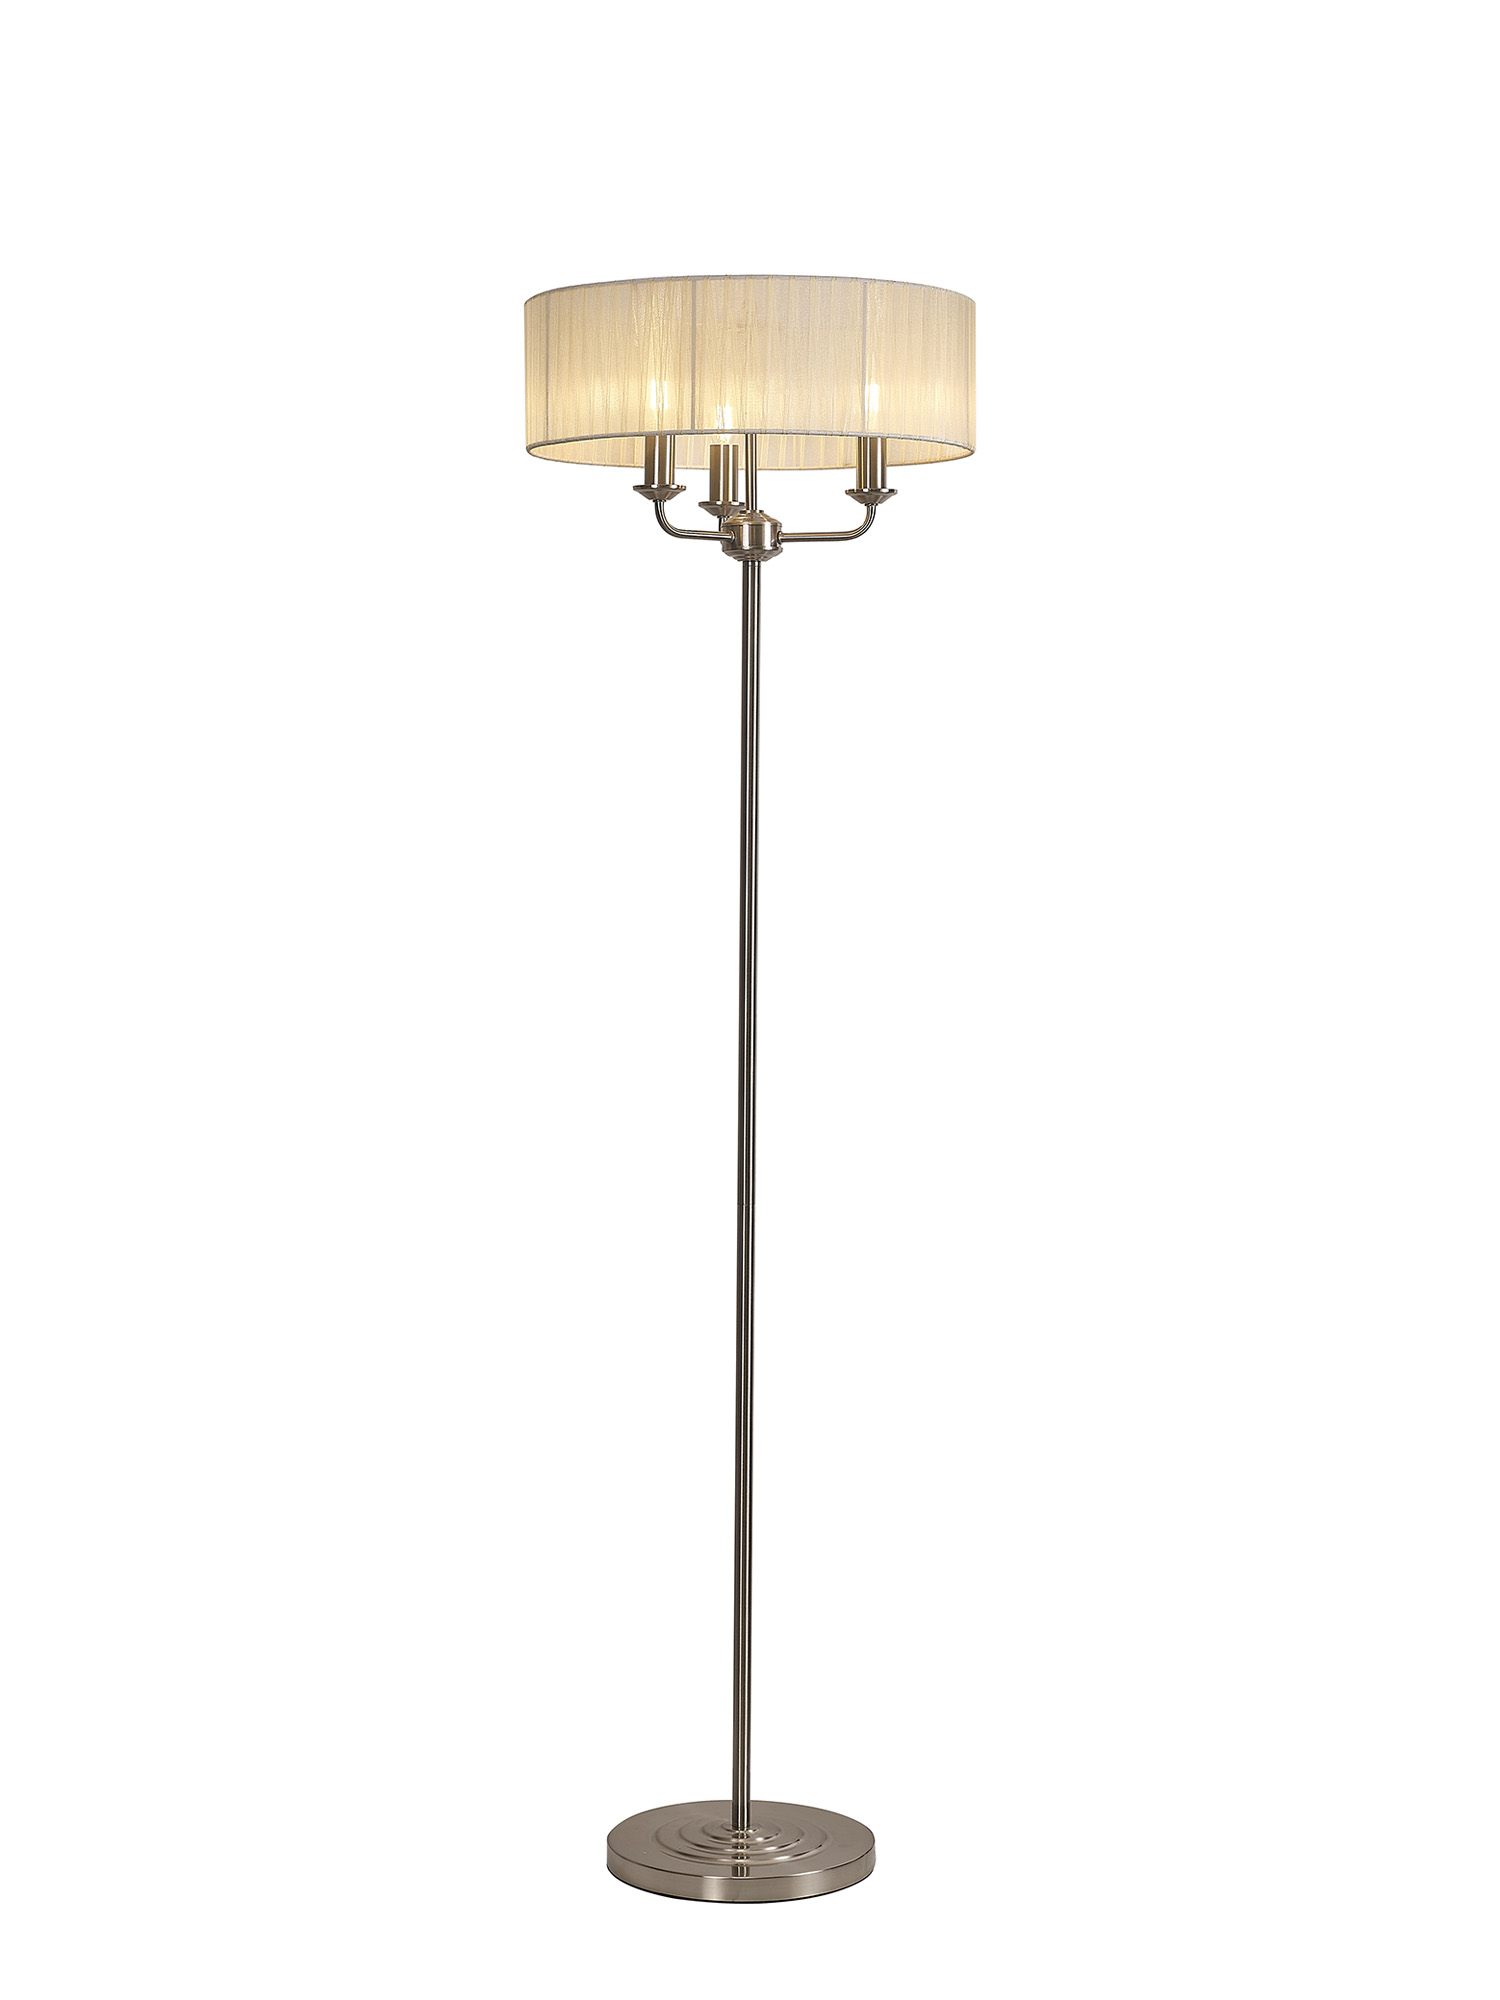 DK0927  Banyan 45cm 3 Light Floor Lamp Satin Nickel, Cream